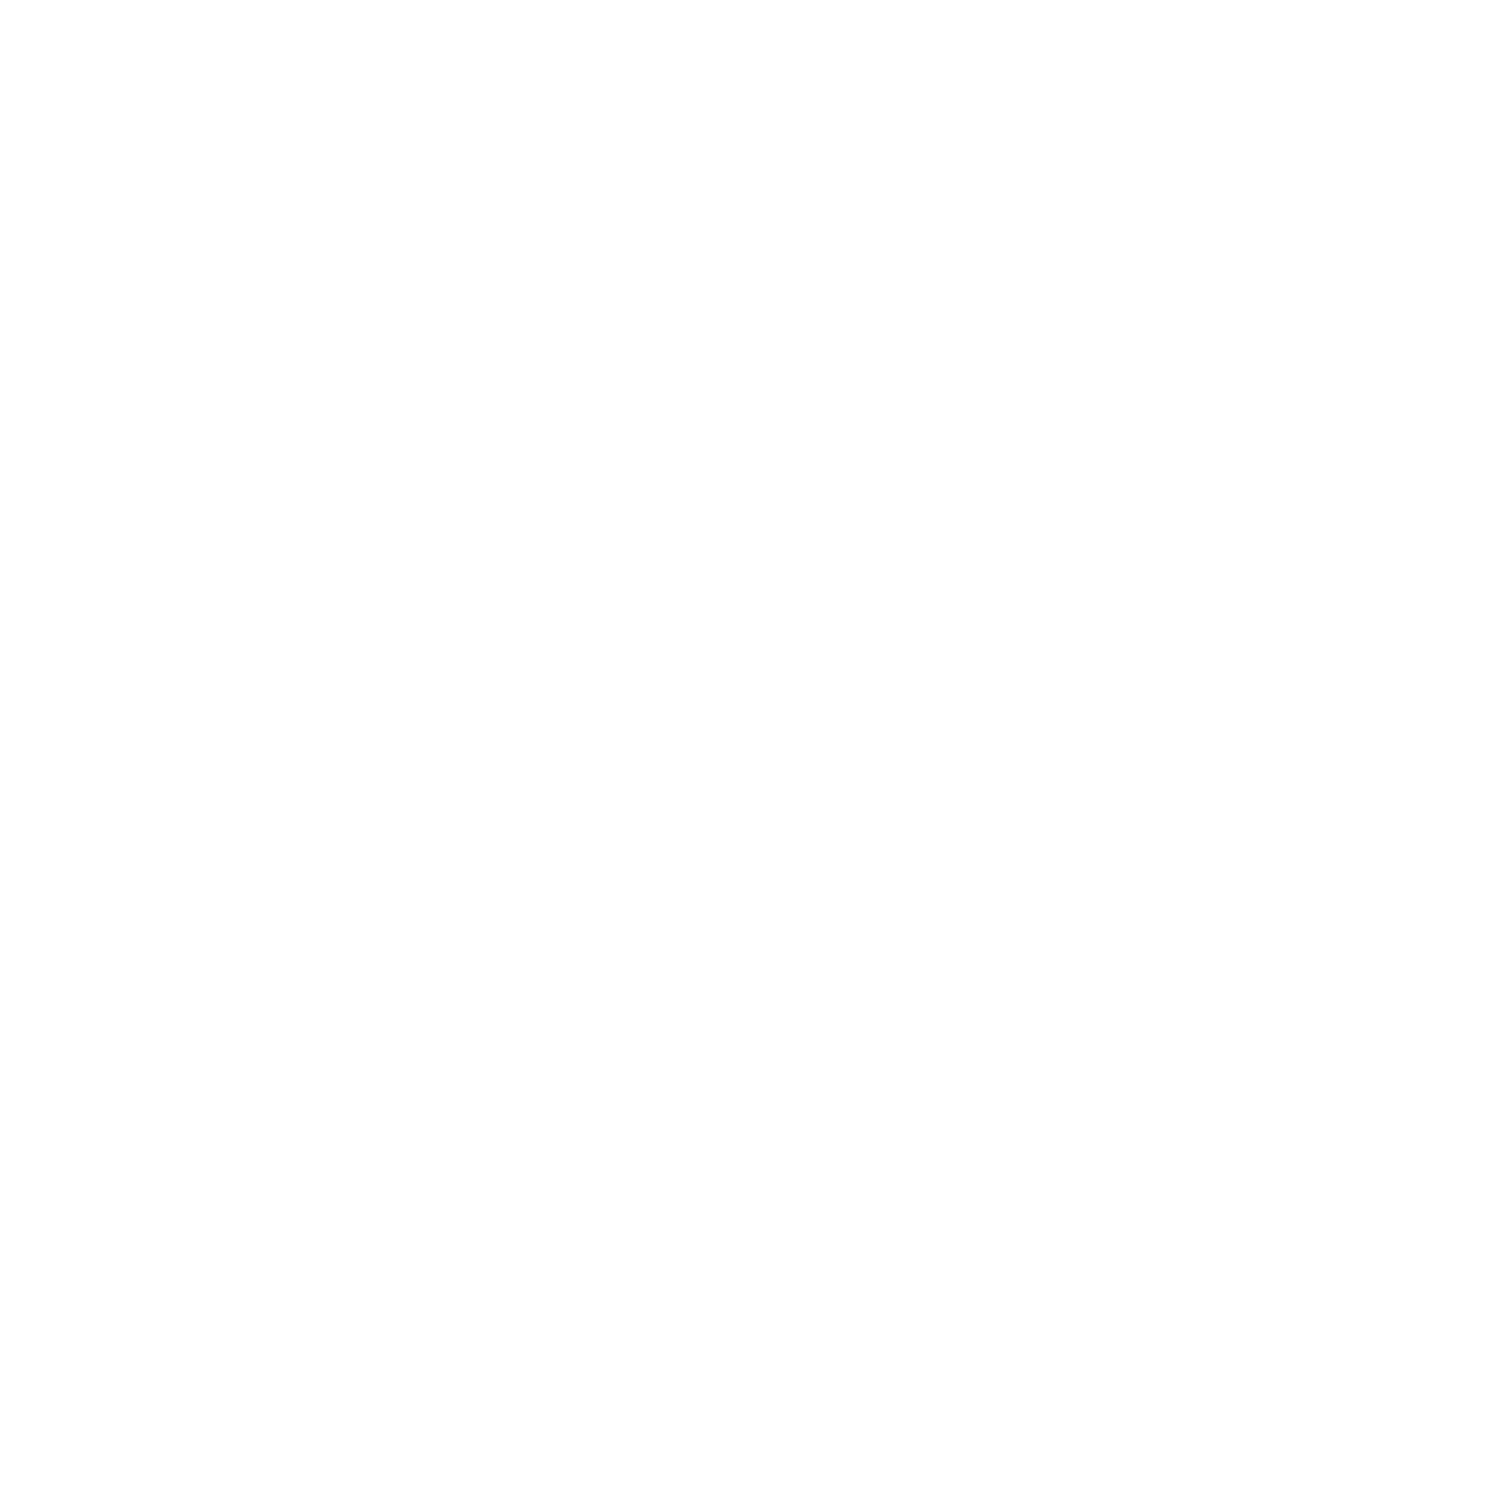 Brazil Church of the Nazarene